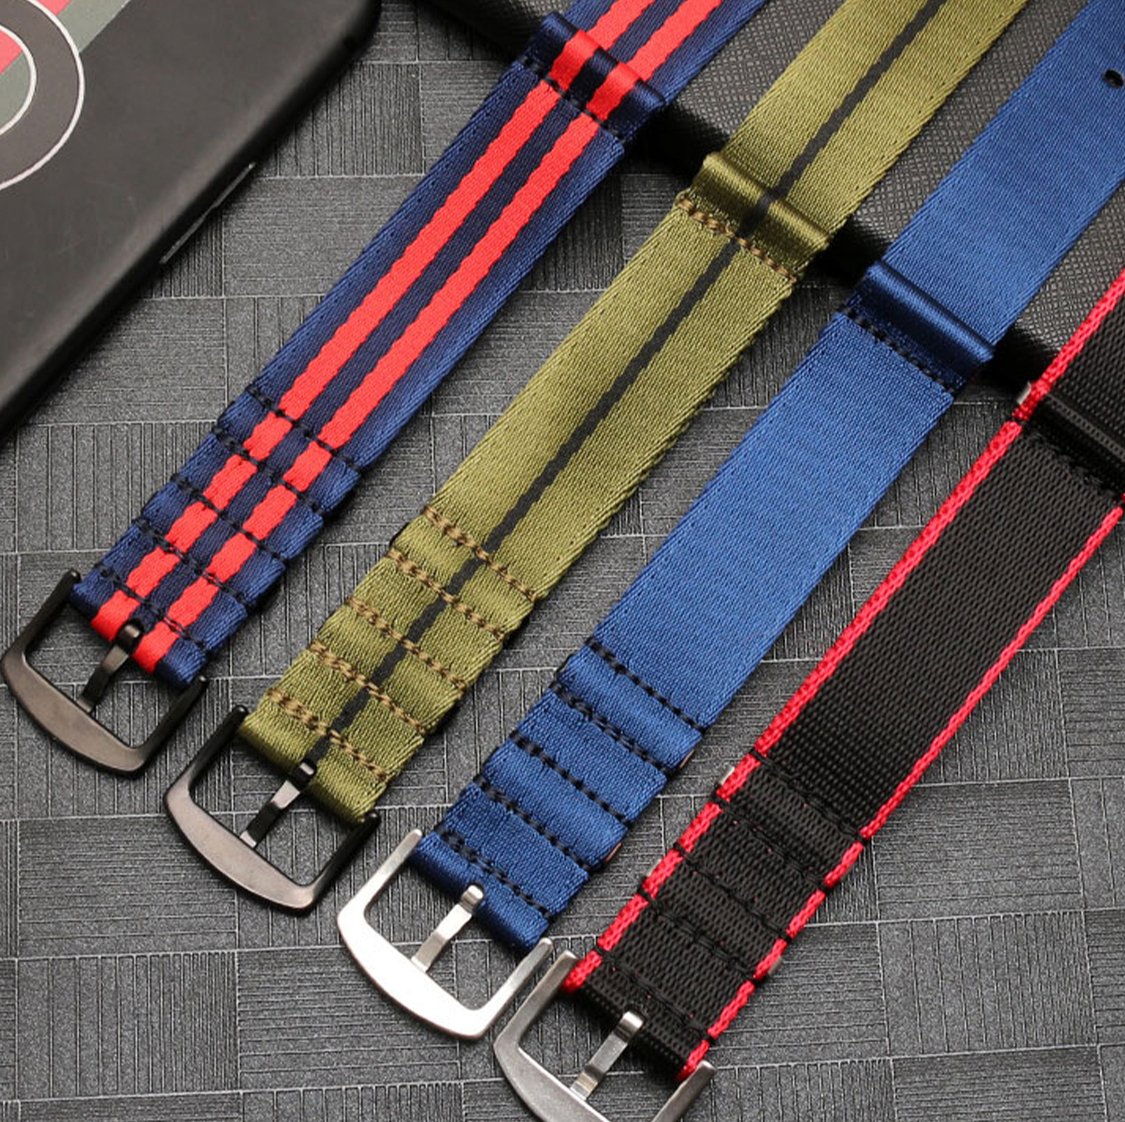 Seatbelt Ballistic Nylon Strap Black with Blue Stripe -StrapSeeker